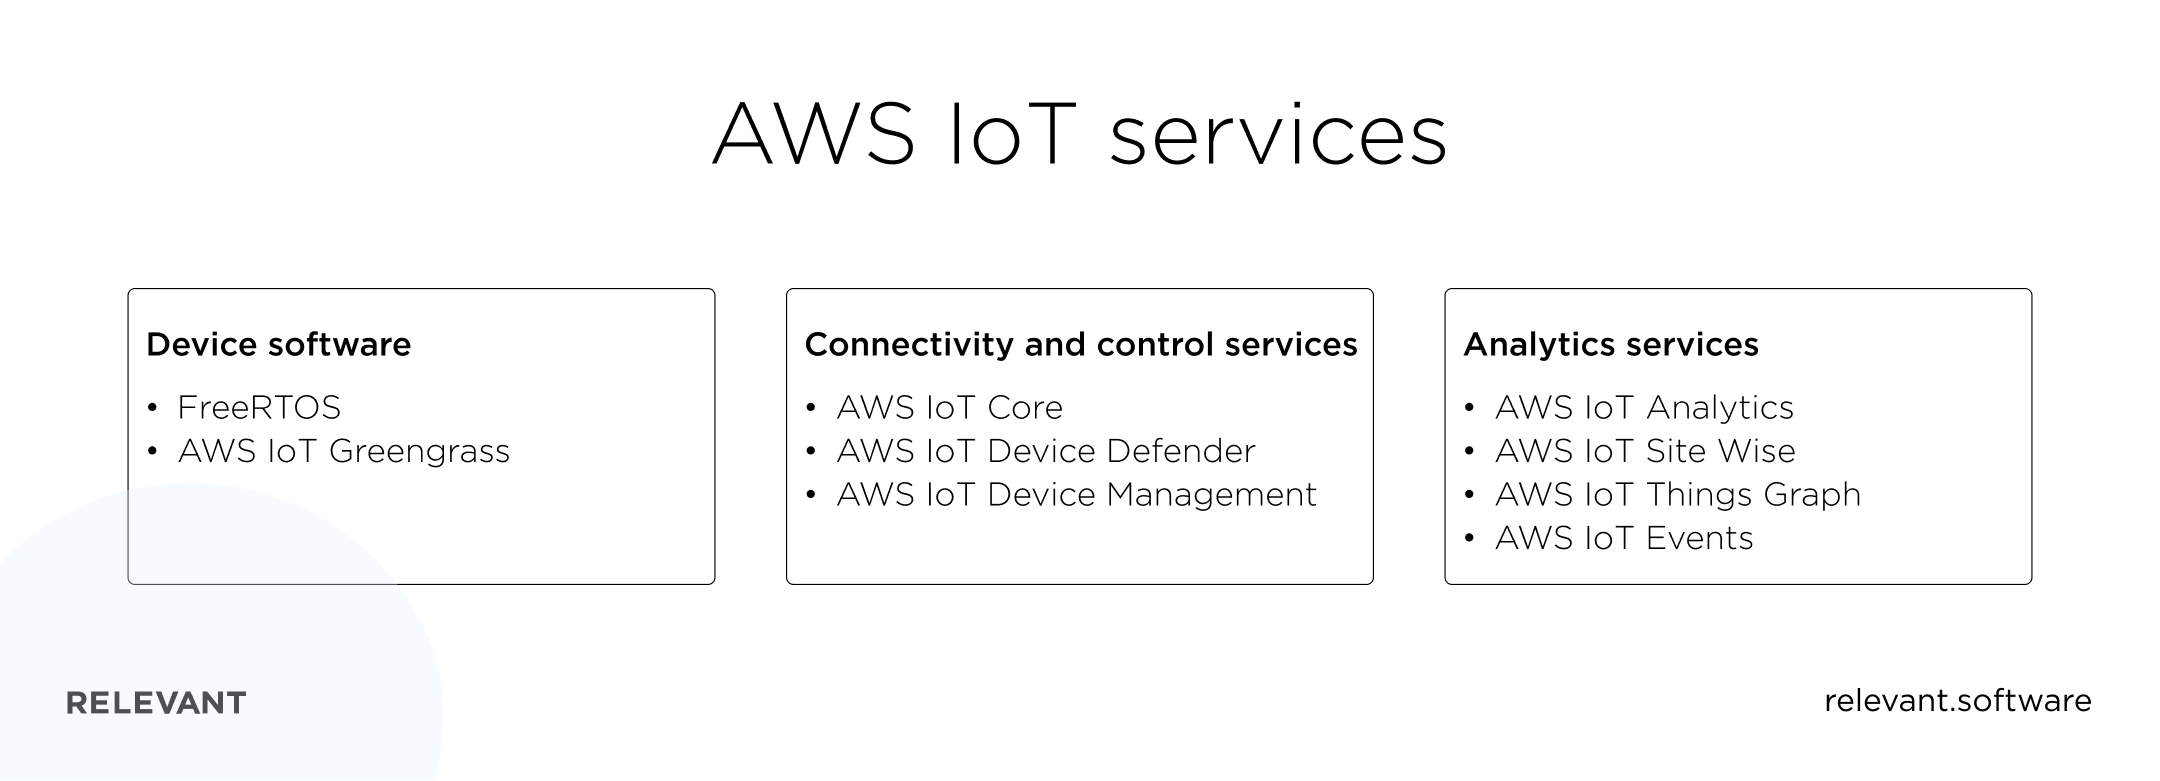 AWS IoT services